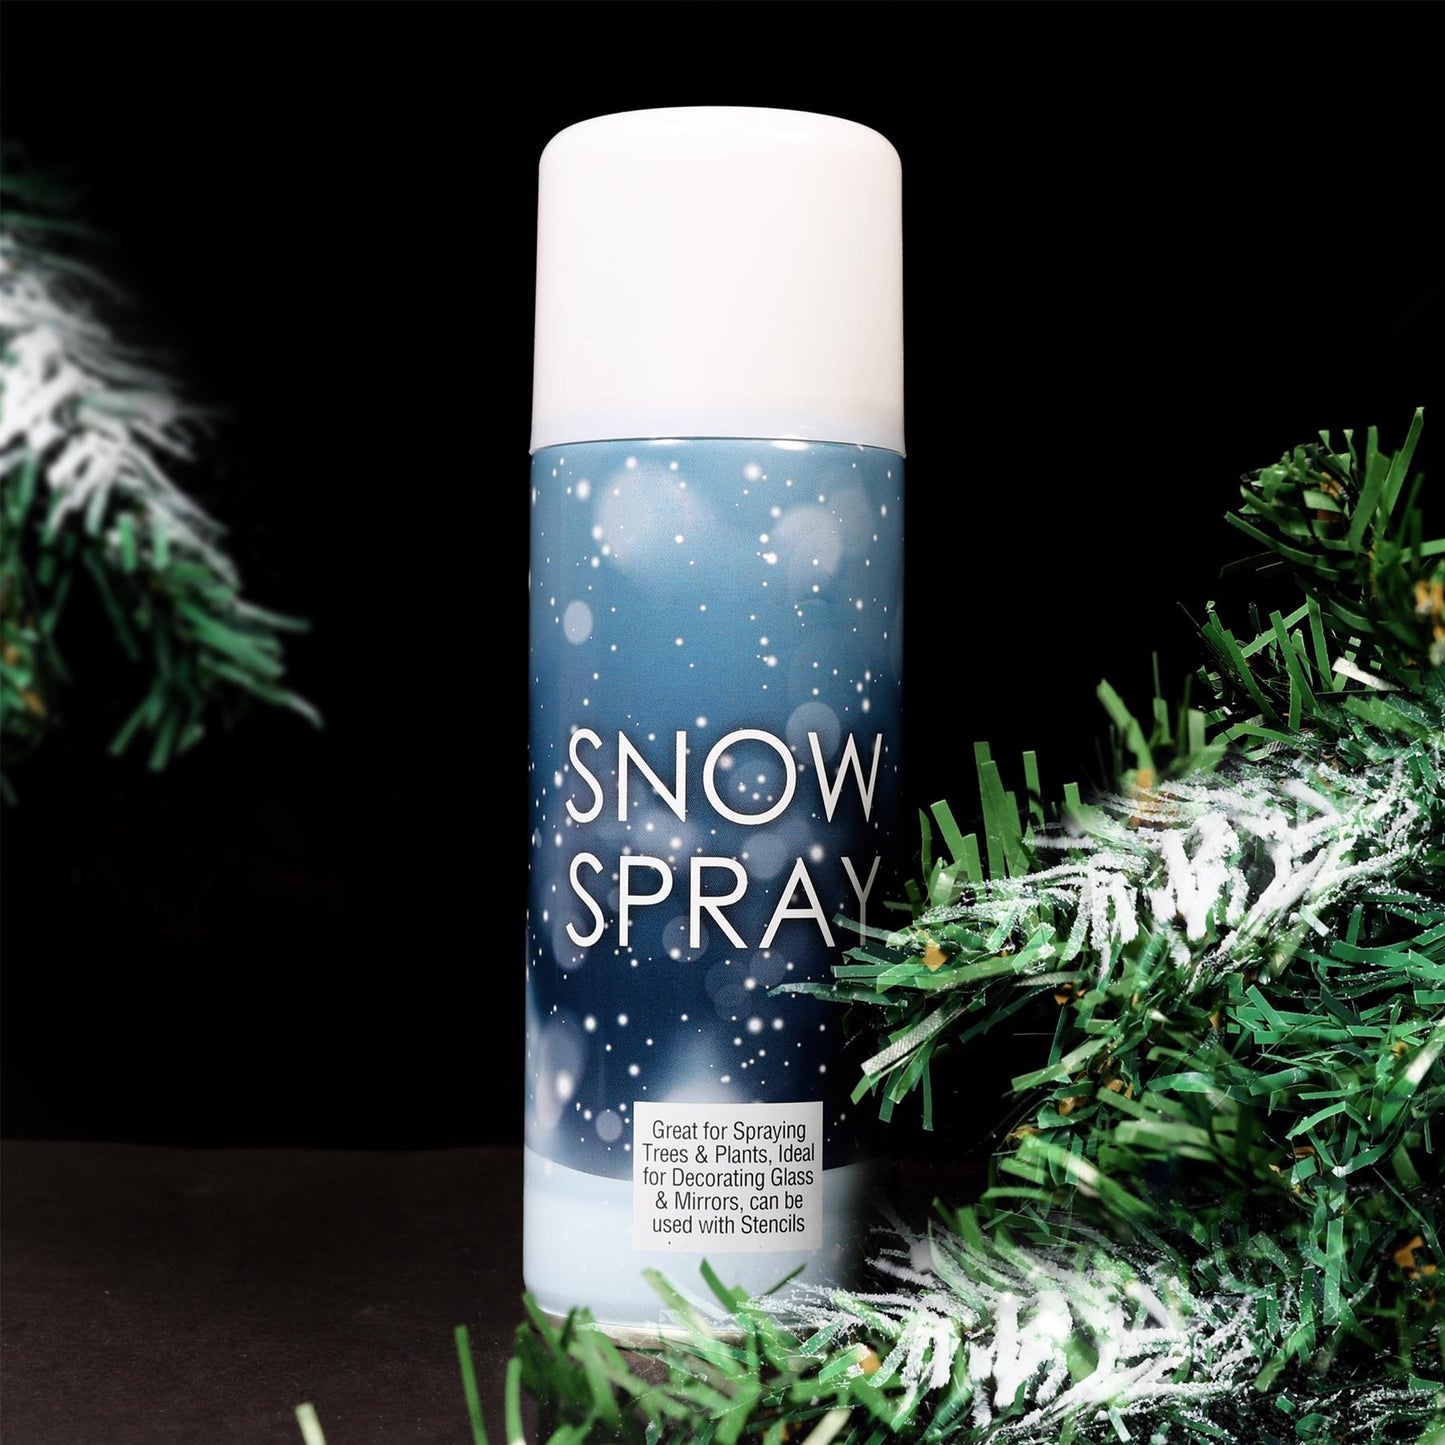 Winter Snow Effect Spray, Festive Snow Spray, Snow in a Can